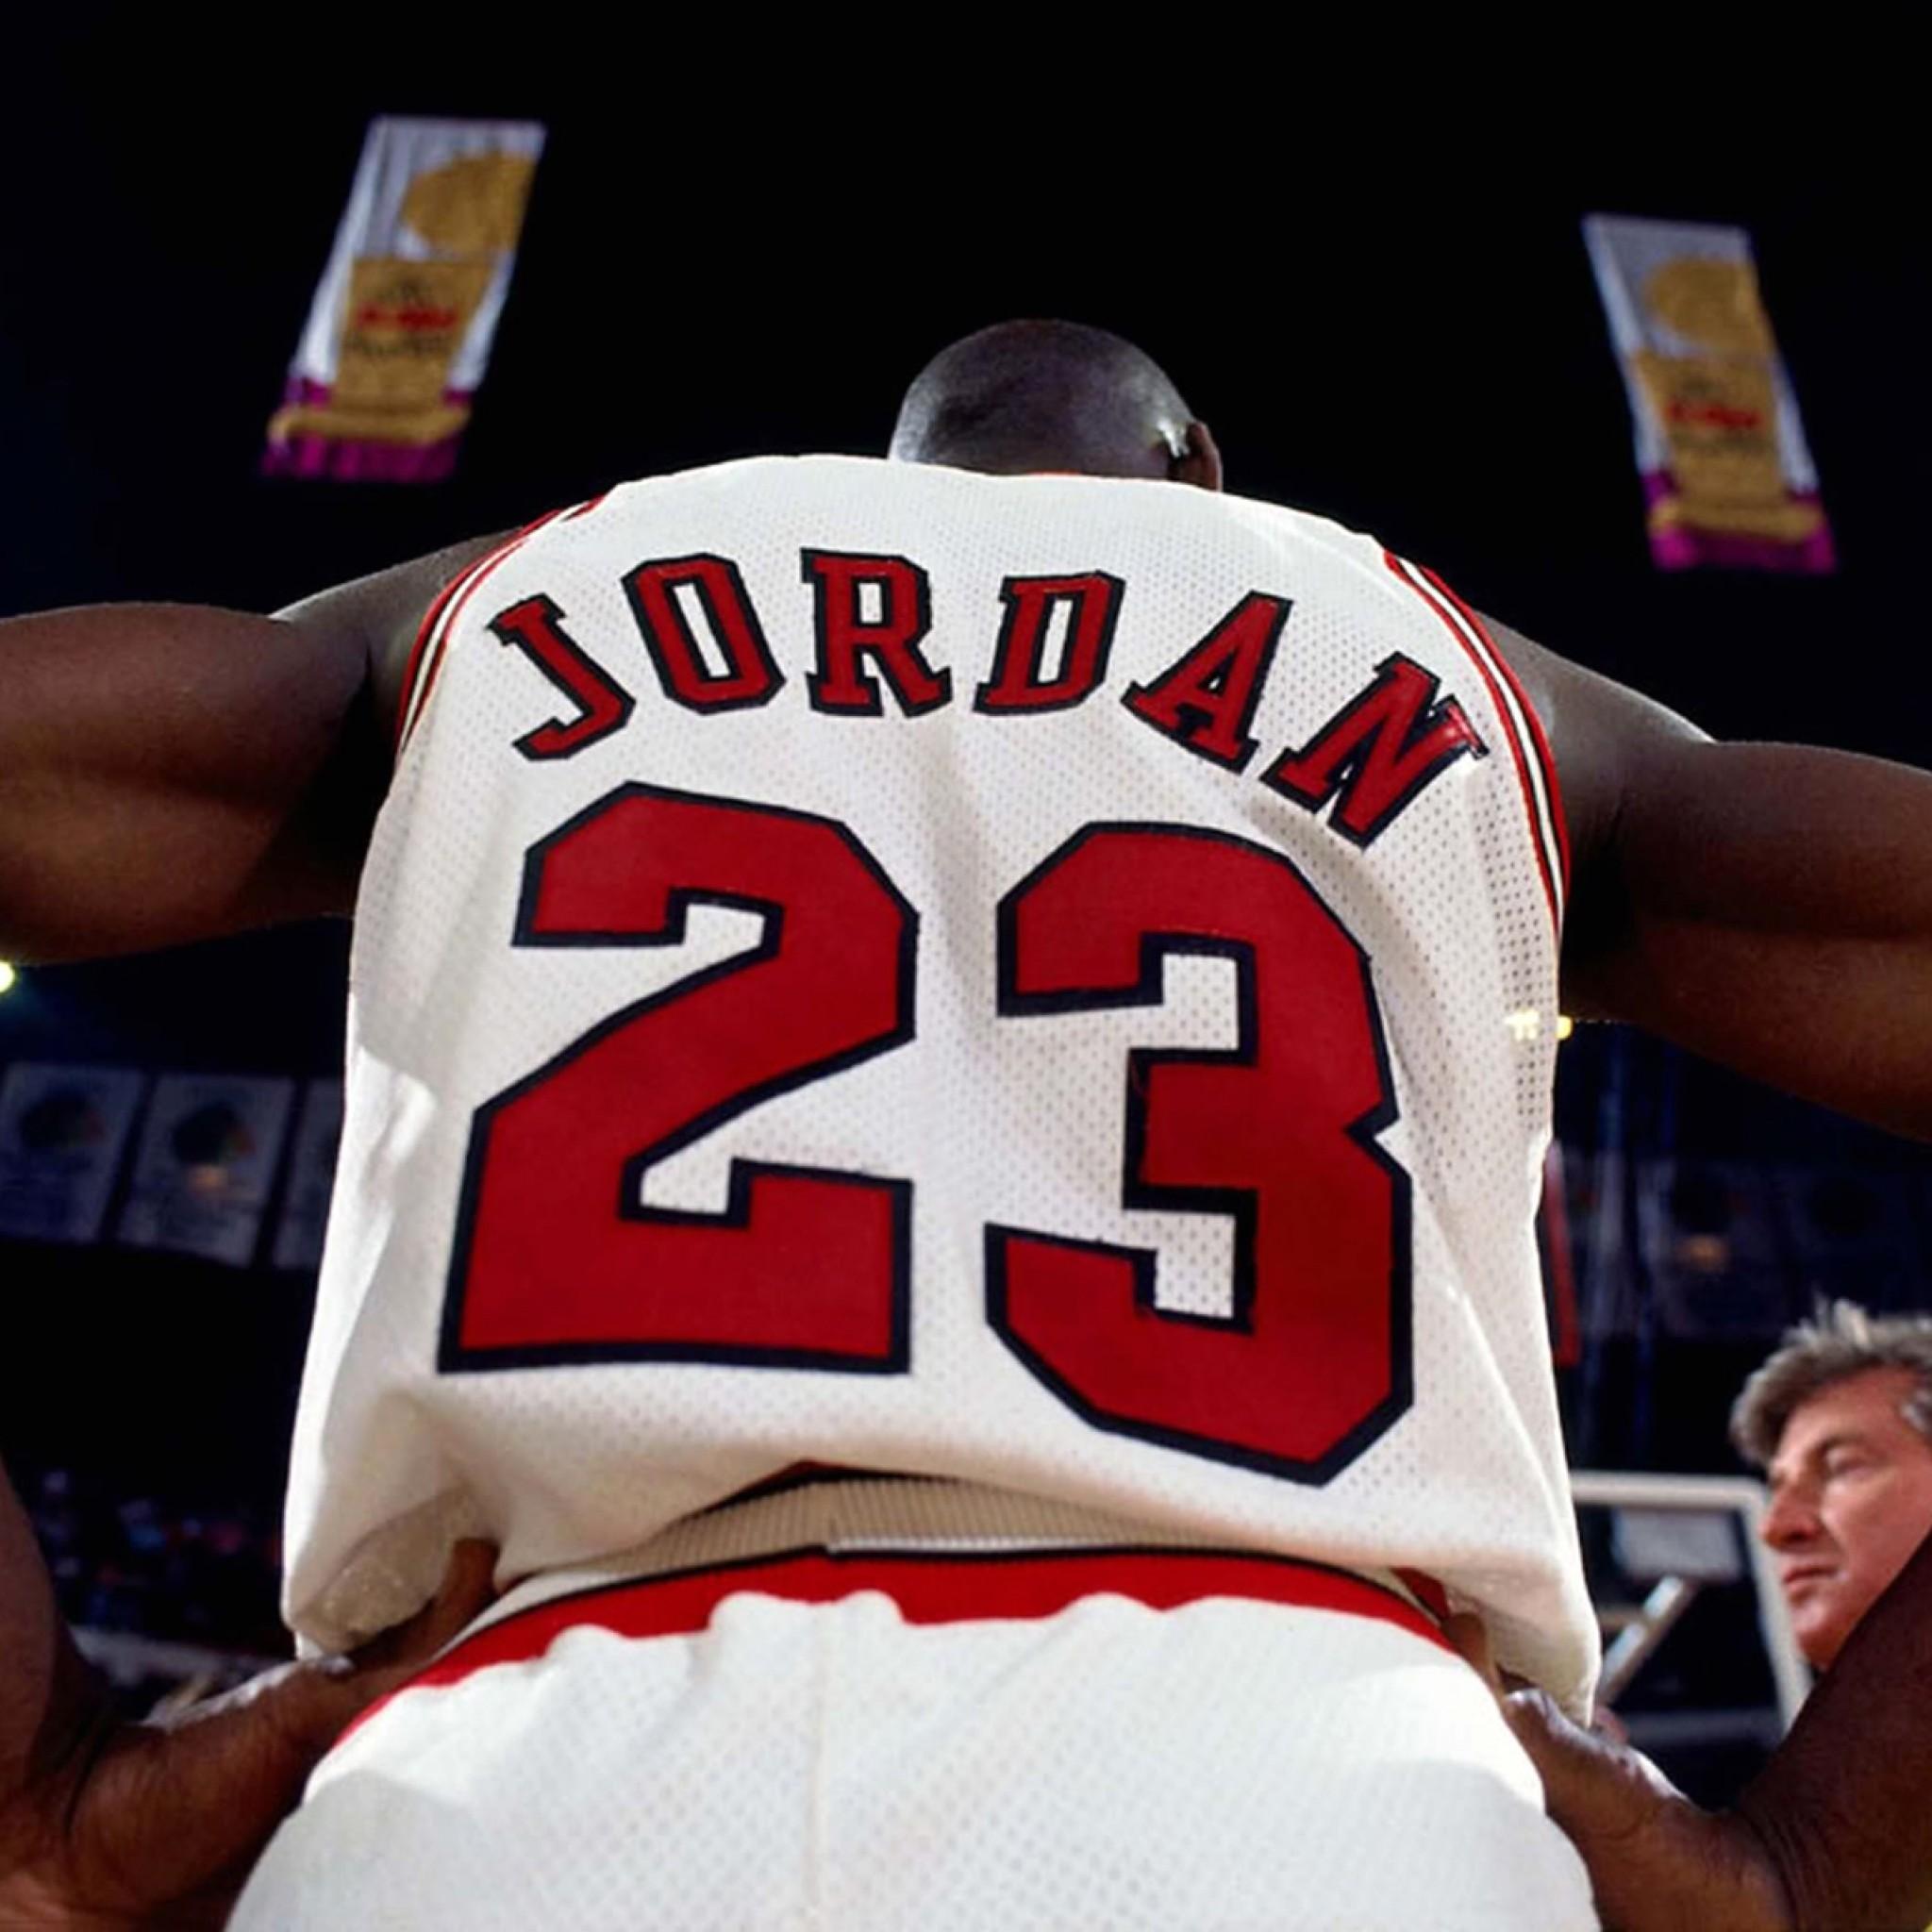 Michael Jordan Jersey Wallpaper by llu258 on DeviantArt  Bulls wallpaper,  Michael jordan jersey, Chicago bulls wallpaper